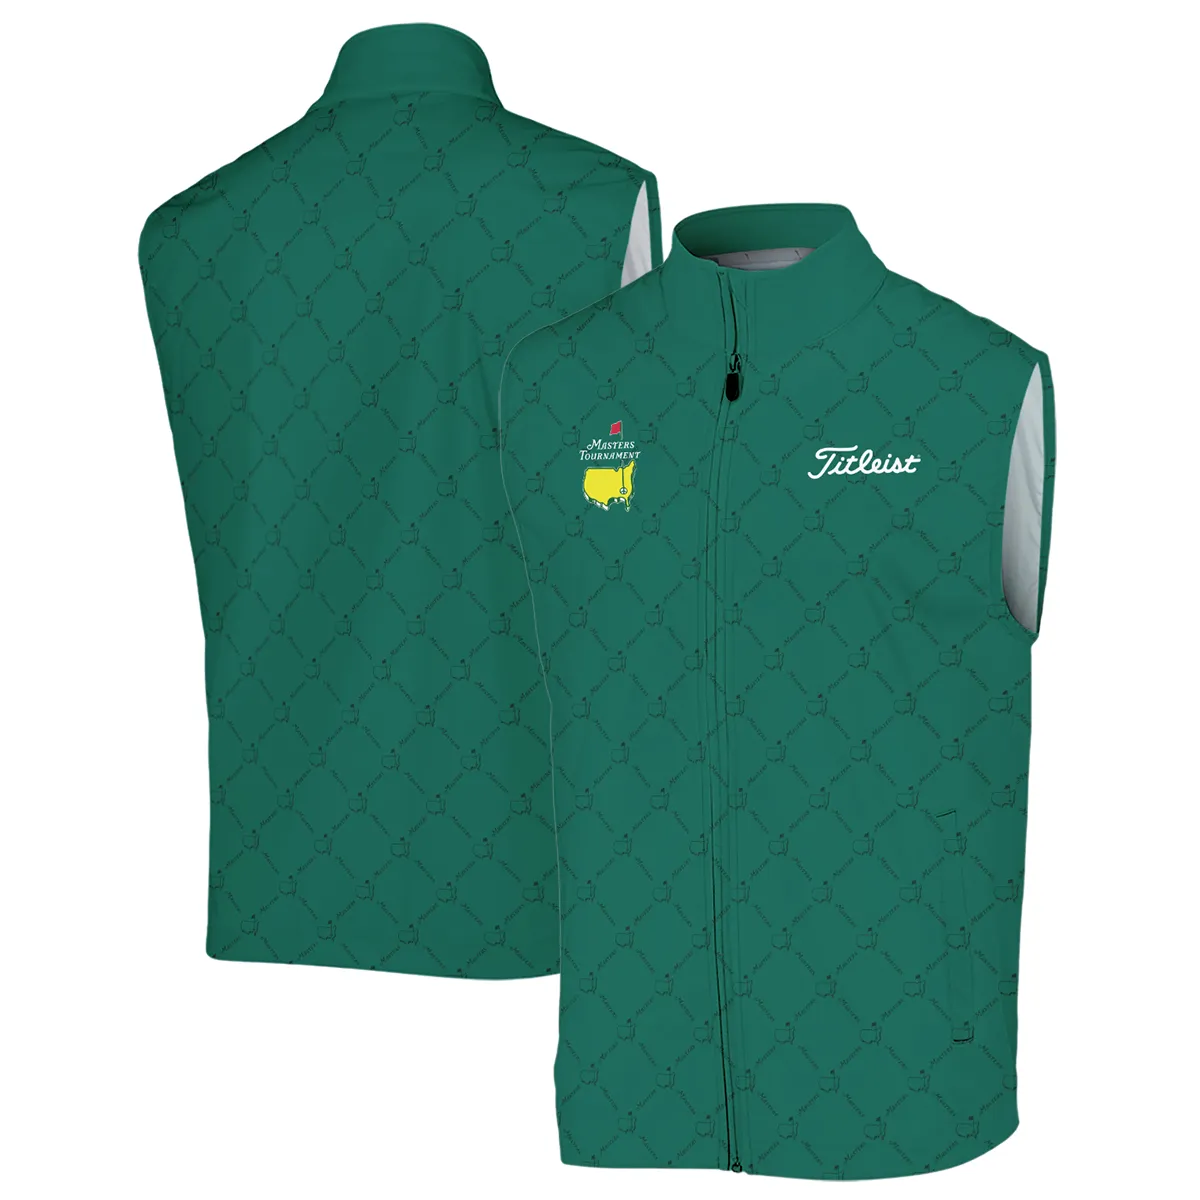 Golf Sport Pattern Color Green Mix Black Masters Tournament Titleist Quarter-Zip Jacket Style Classic